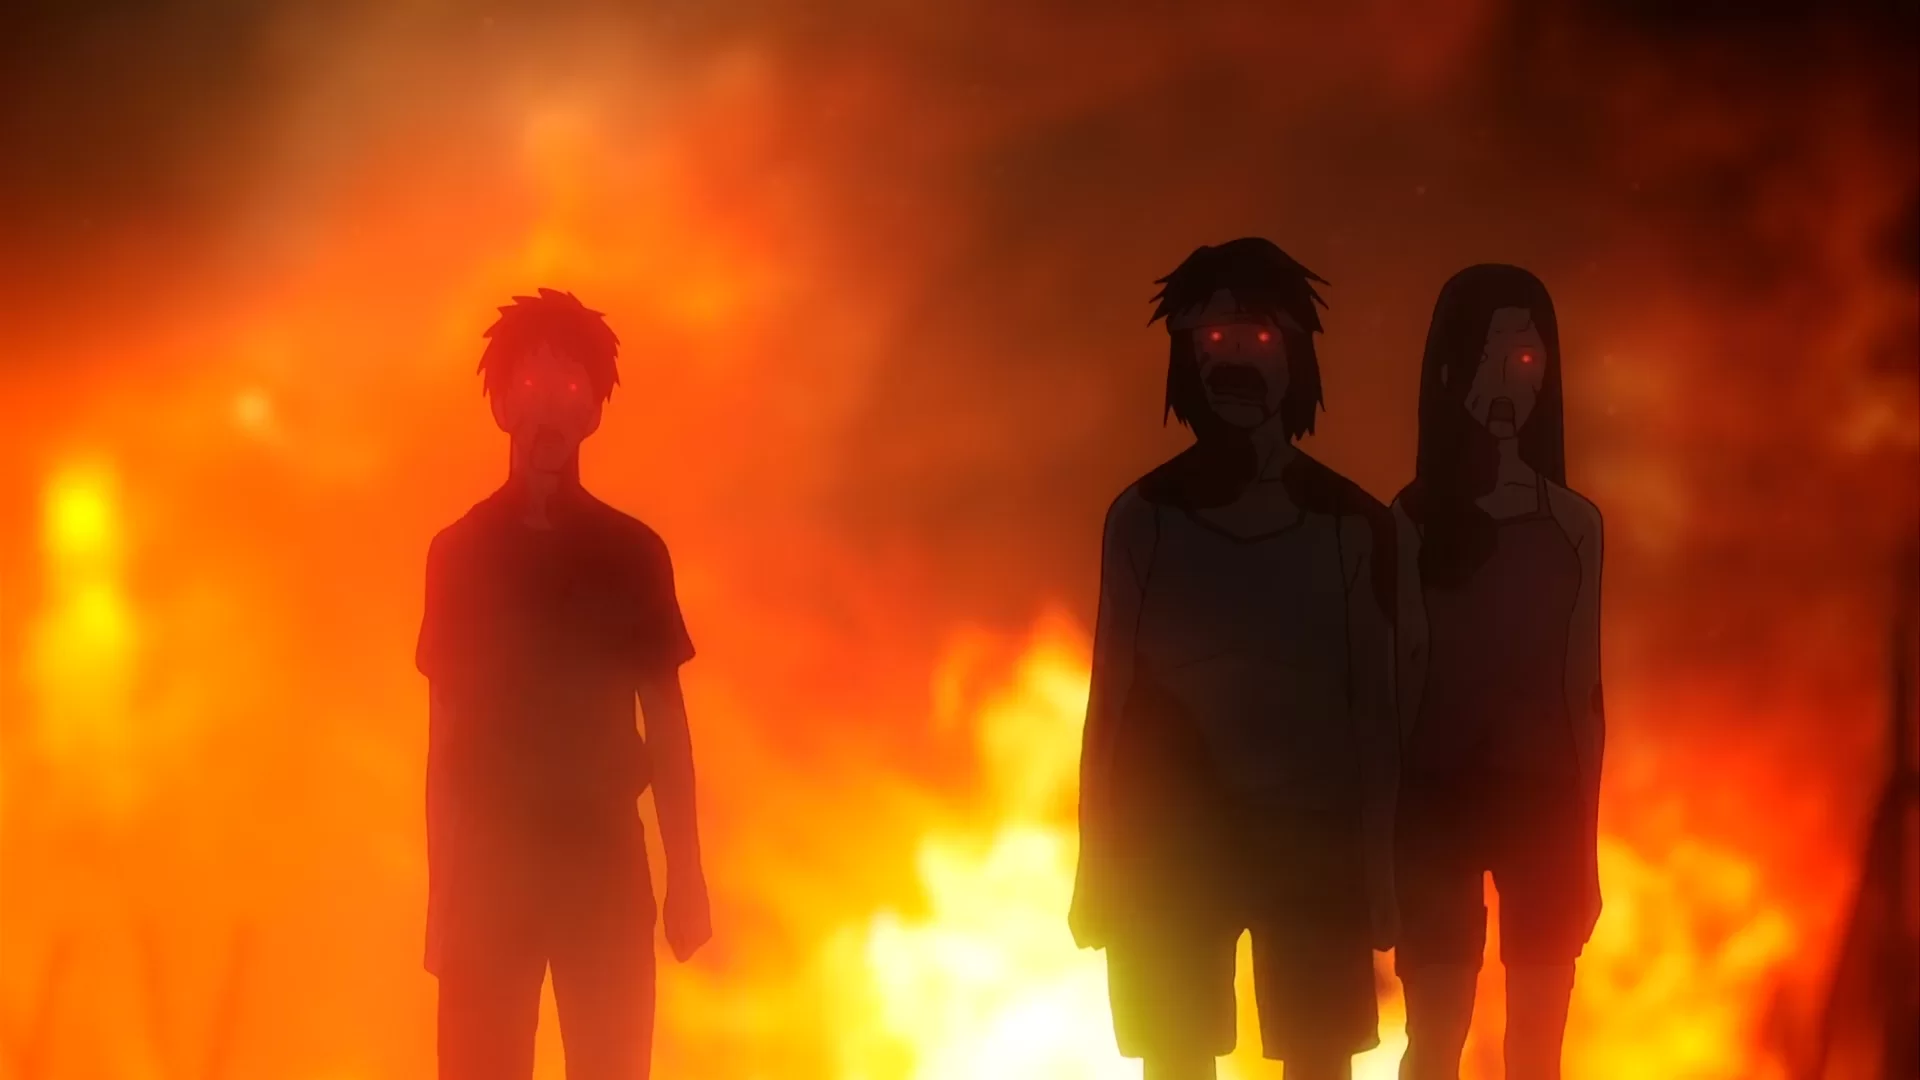 Minaturka 18 odcinka Fate/Zero